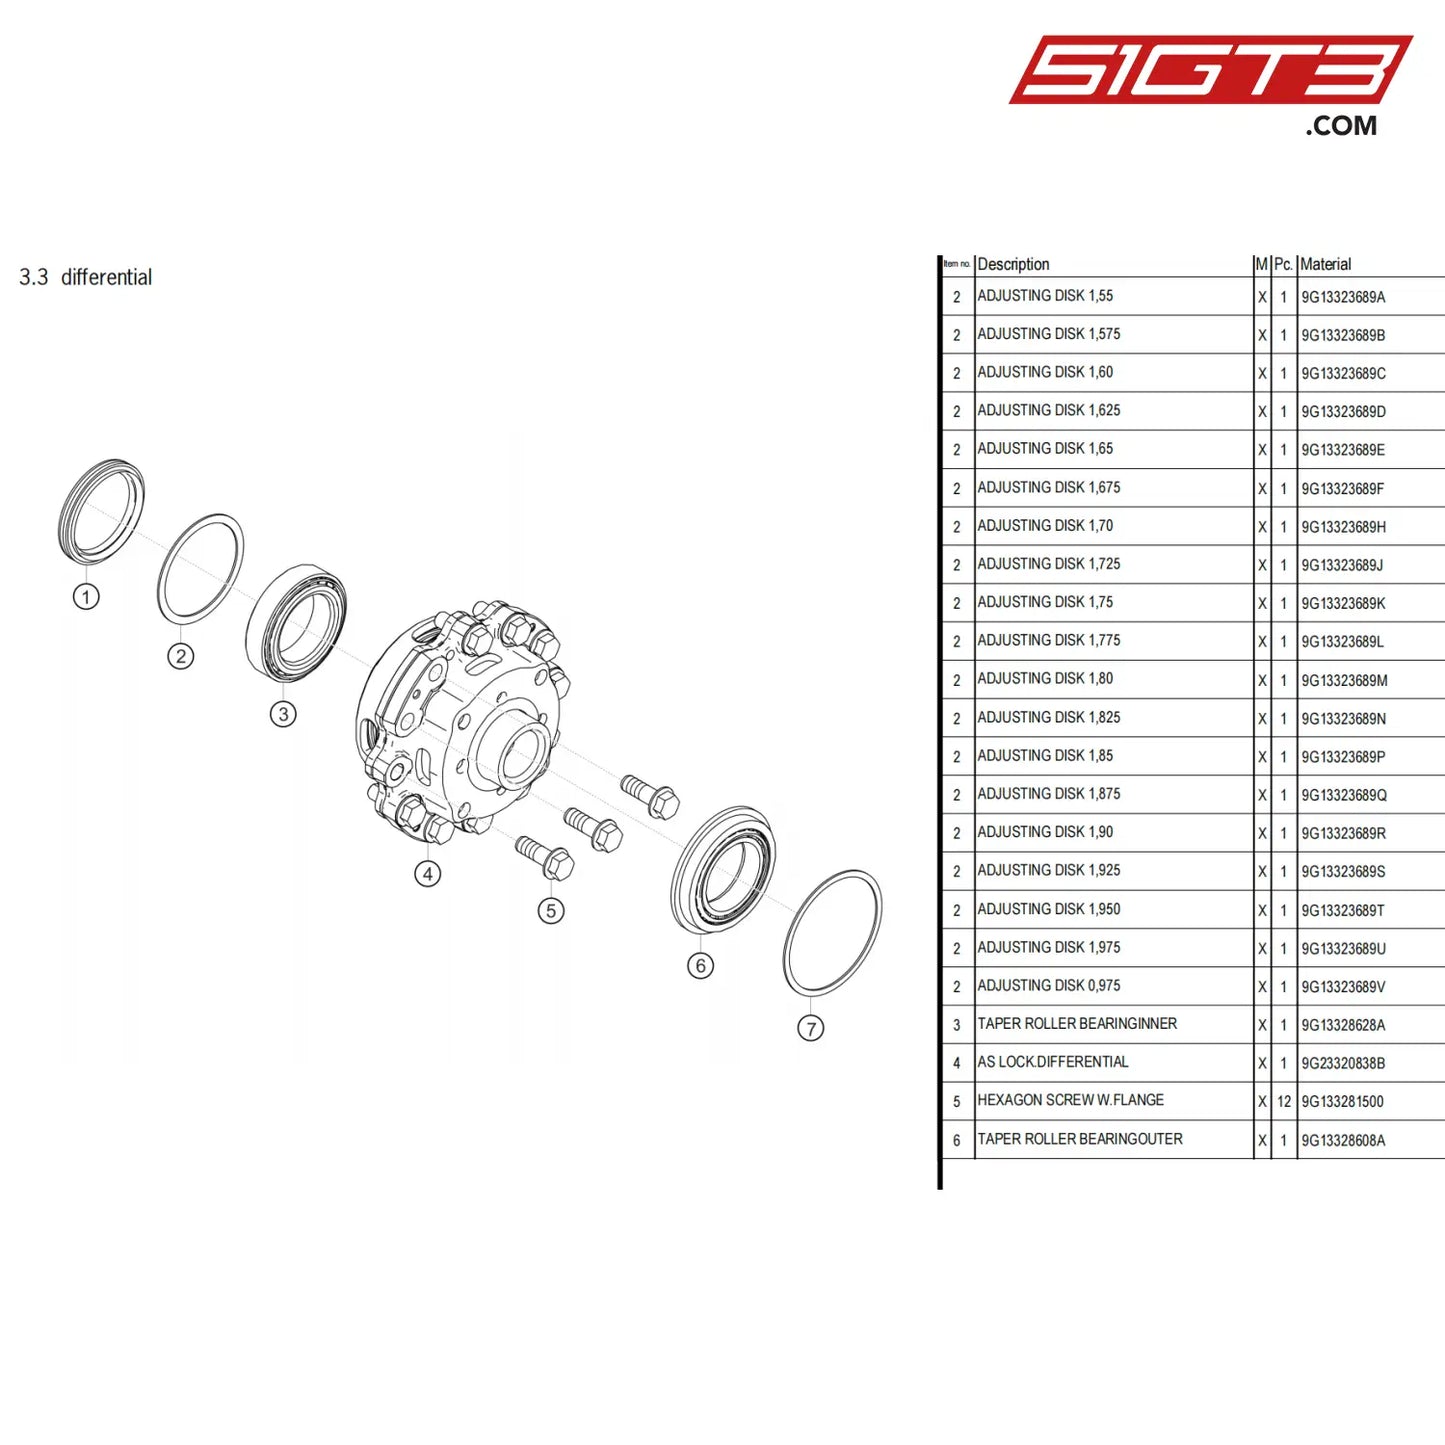 Adjusting Disk 1 900 - 9G13323669L [Porsche 718 Cayman Gt4 Clubsport] Differential